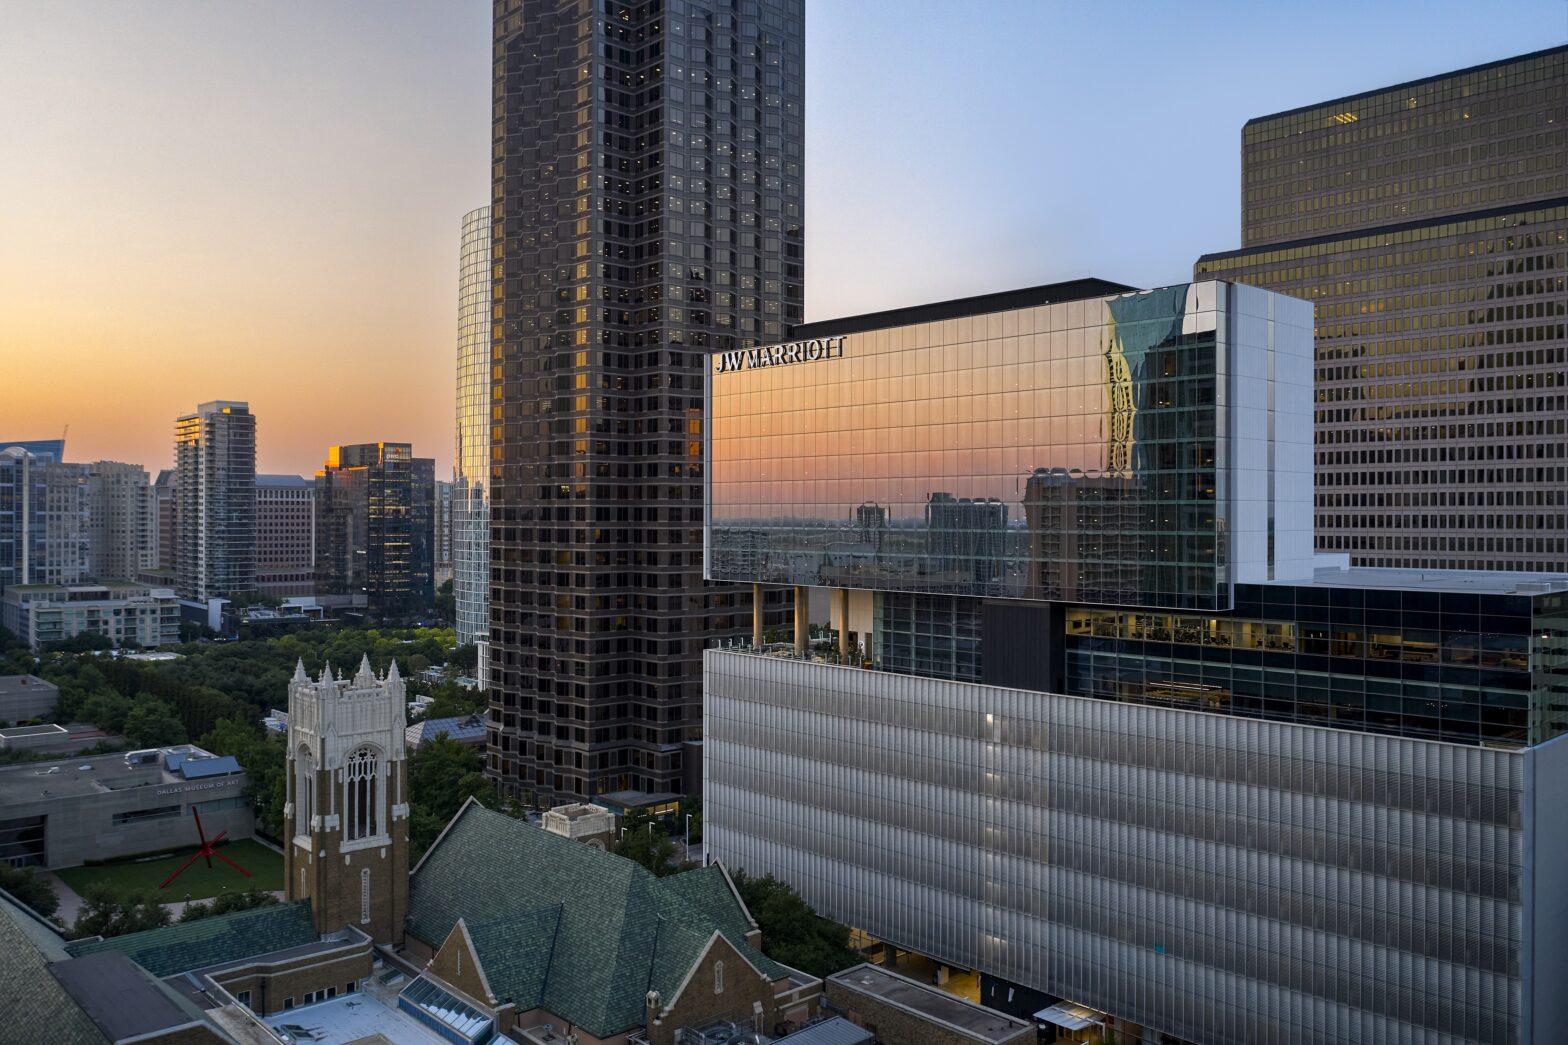 JW Marriott Dallas at sunrise